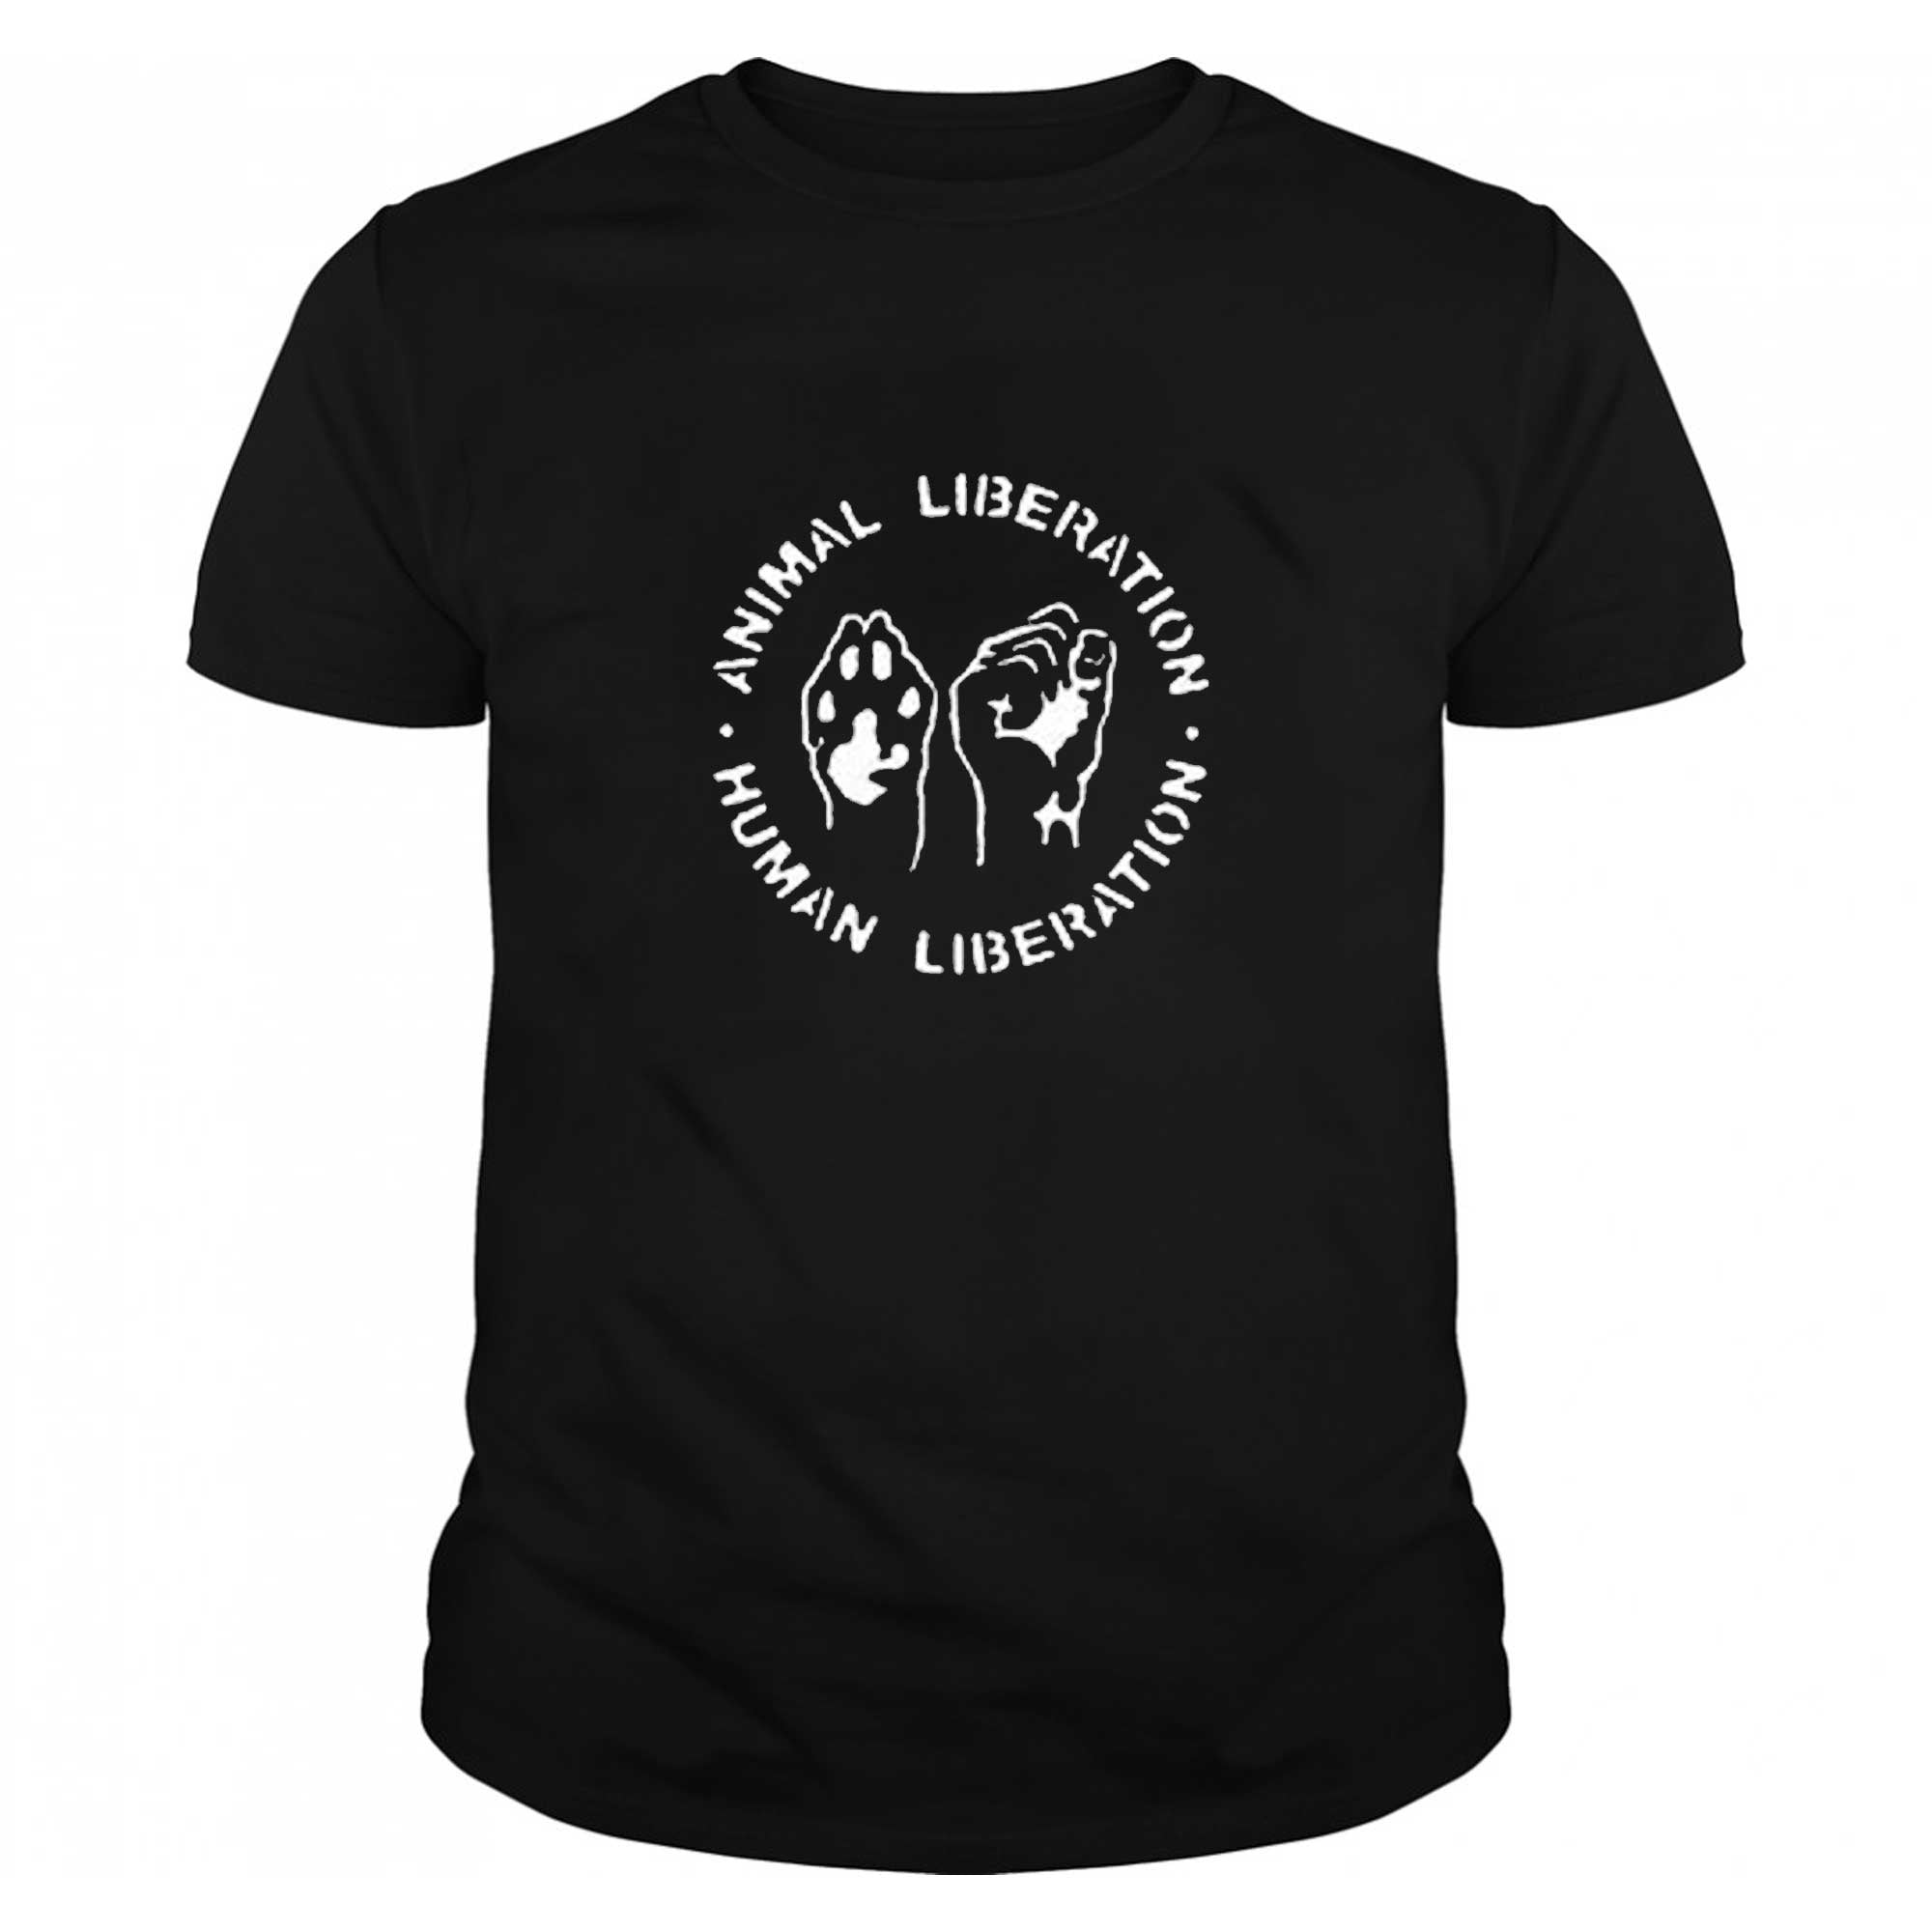 Skitongift-Animal-Rights-Tshirt-Animal-Human-Liberation-T-Shirt-Vegan-Vegetaran-Tee-Shirt-Funny-Shirts-Long-Sleeve-Tee-Hoody-Hoodie